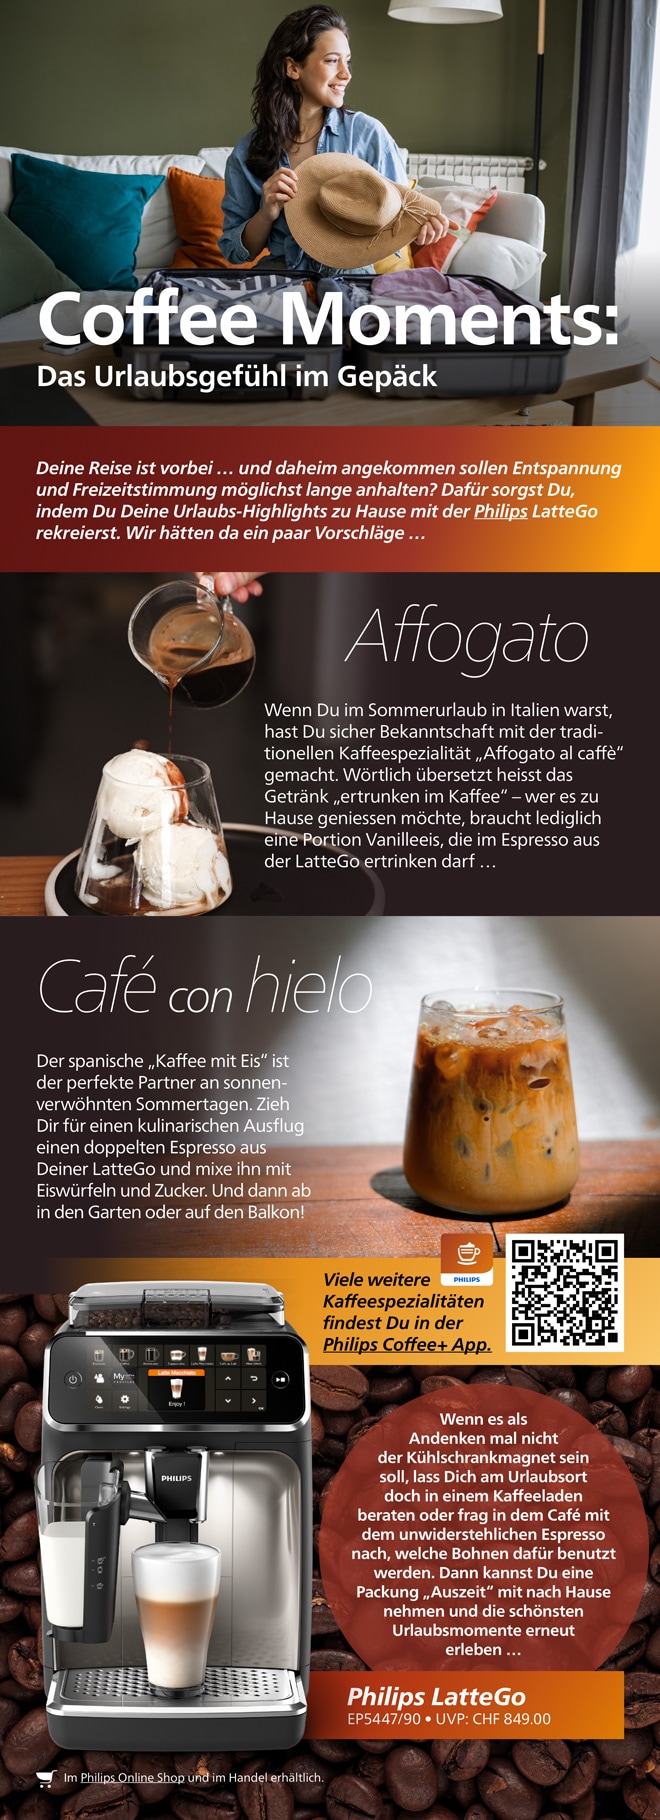 Philips Themensheet Coffee Moments - Teil4